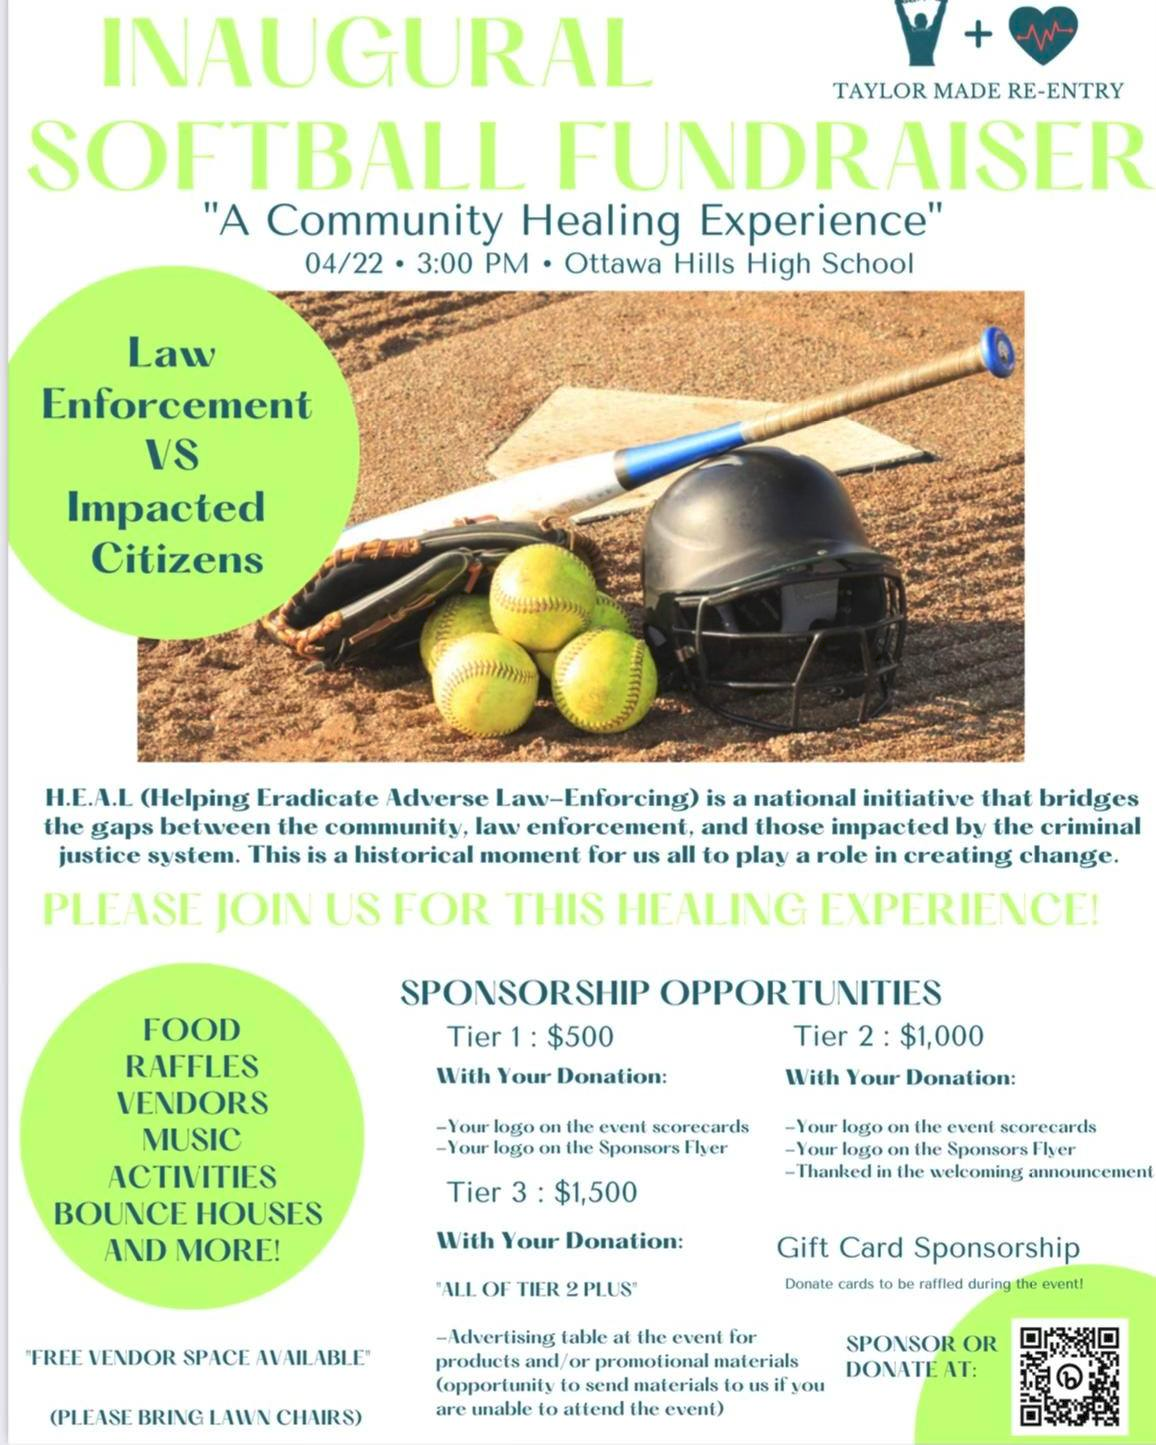 Inaugural Softball Fundraiser for Community Healing in Grand Rapids